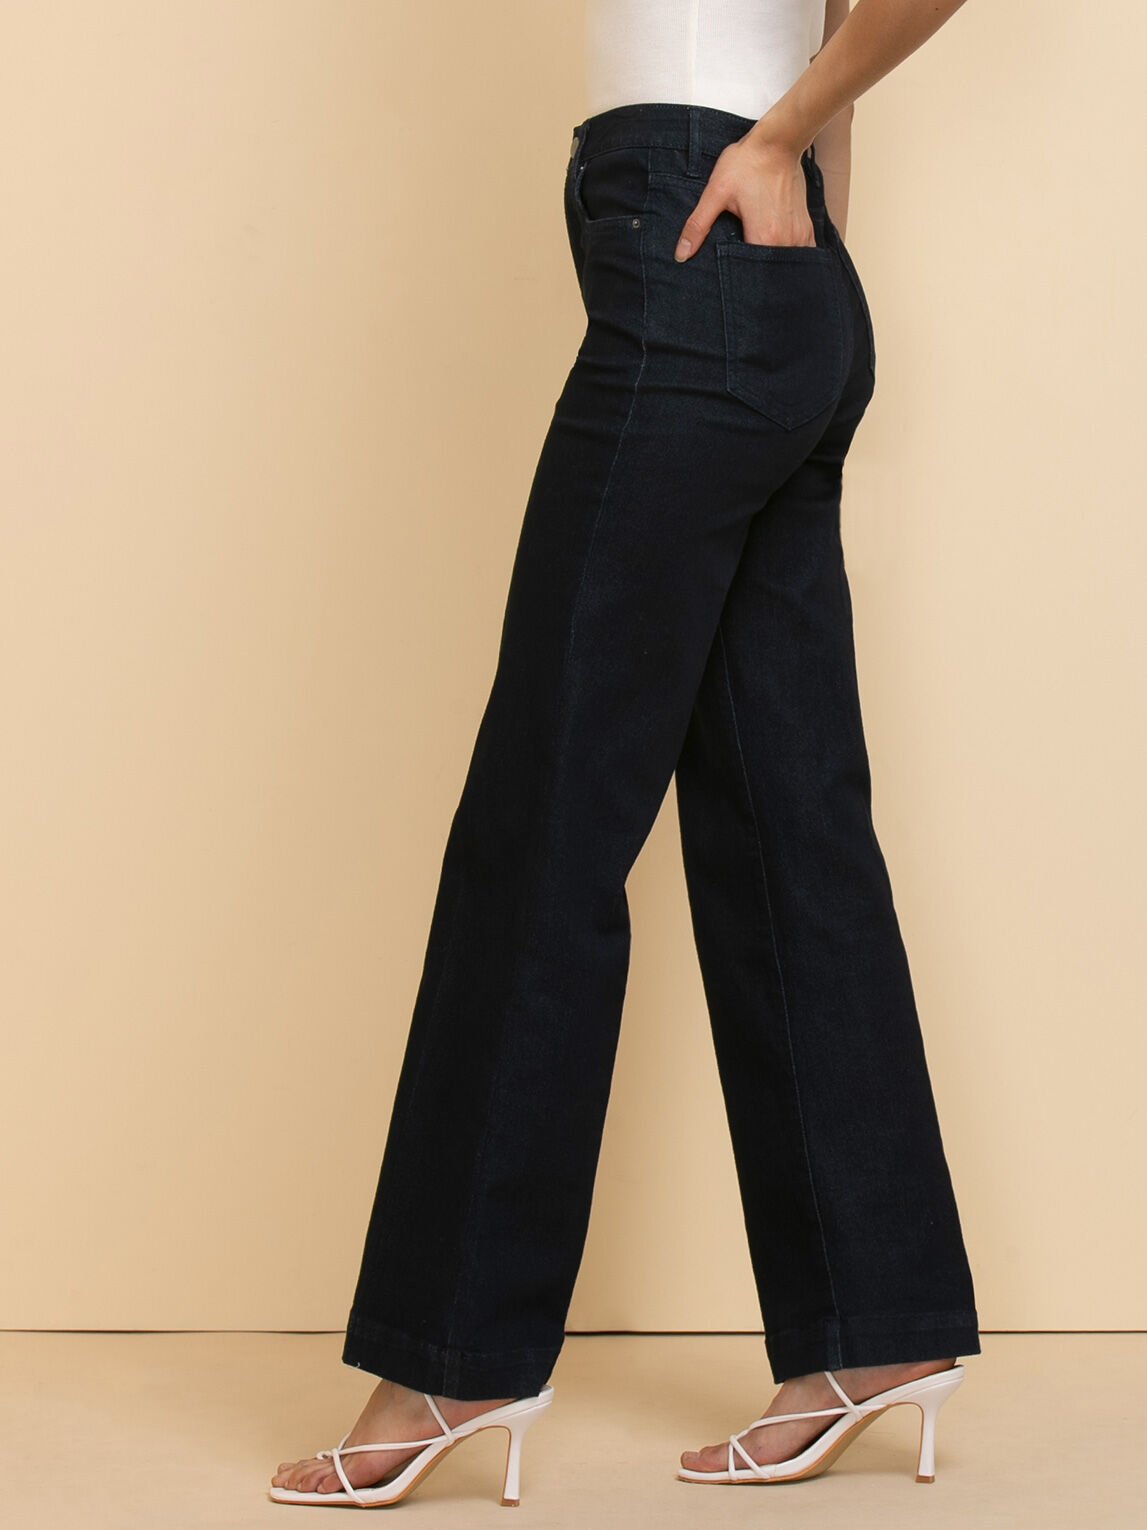 Shop Women's Denim | Ripped Jeans For Women & More | Ksubi | Ksubi ++